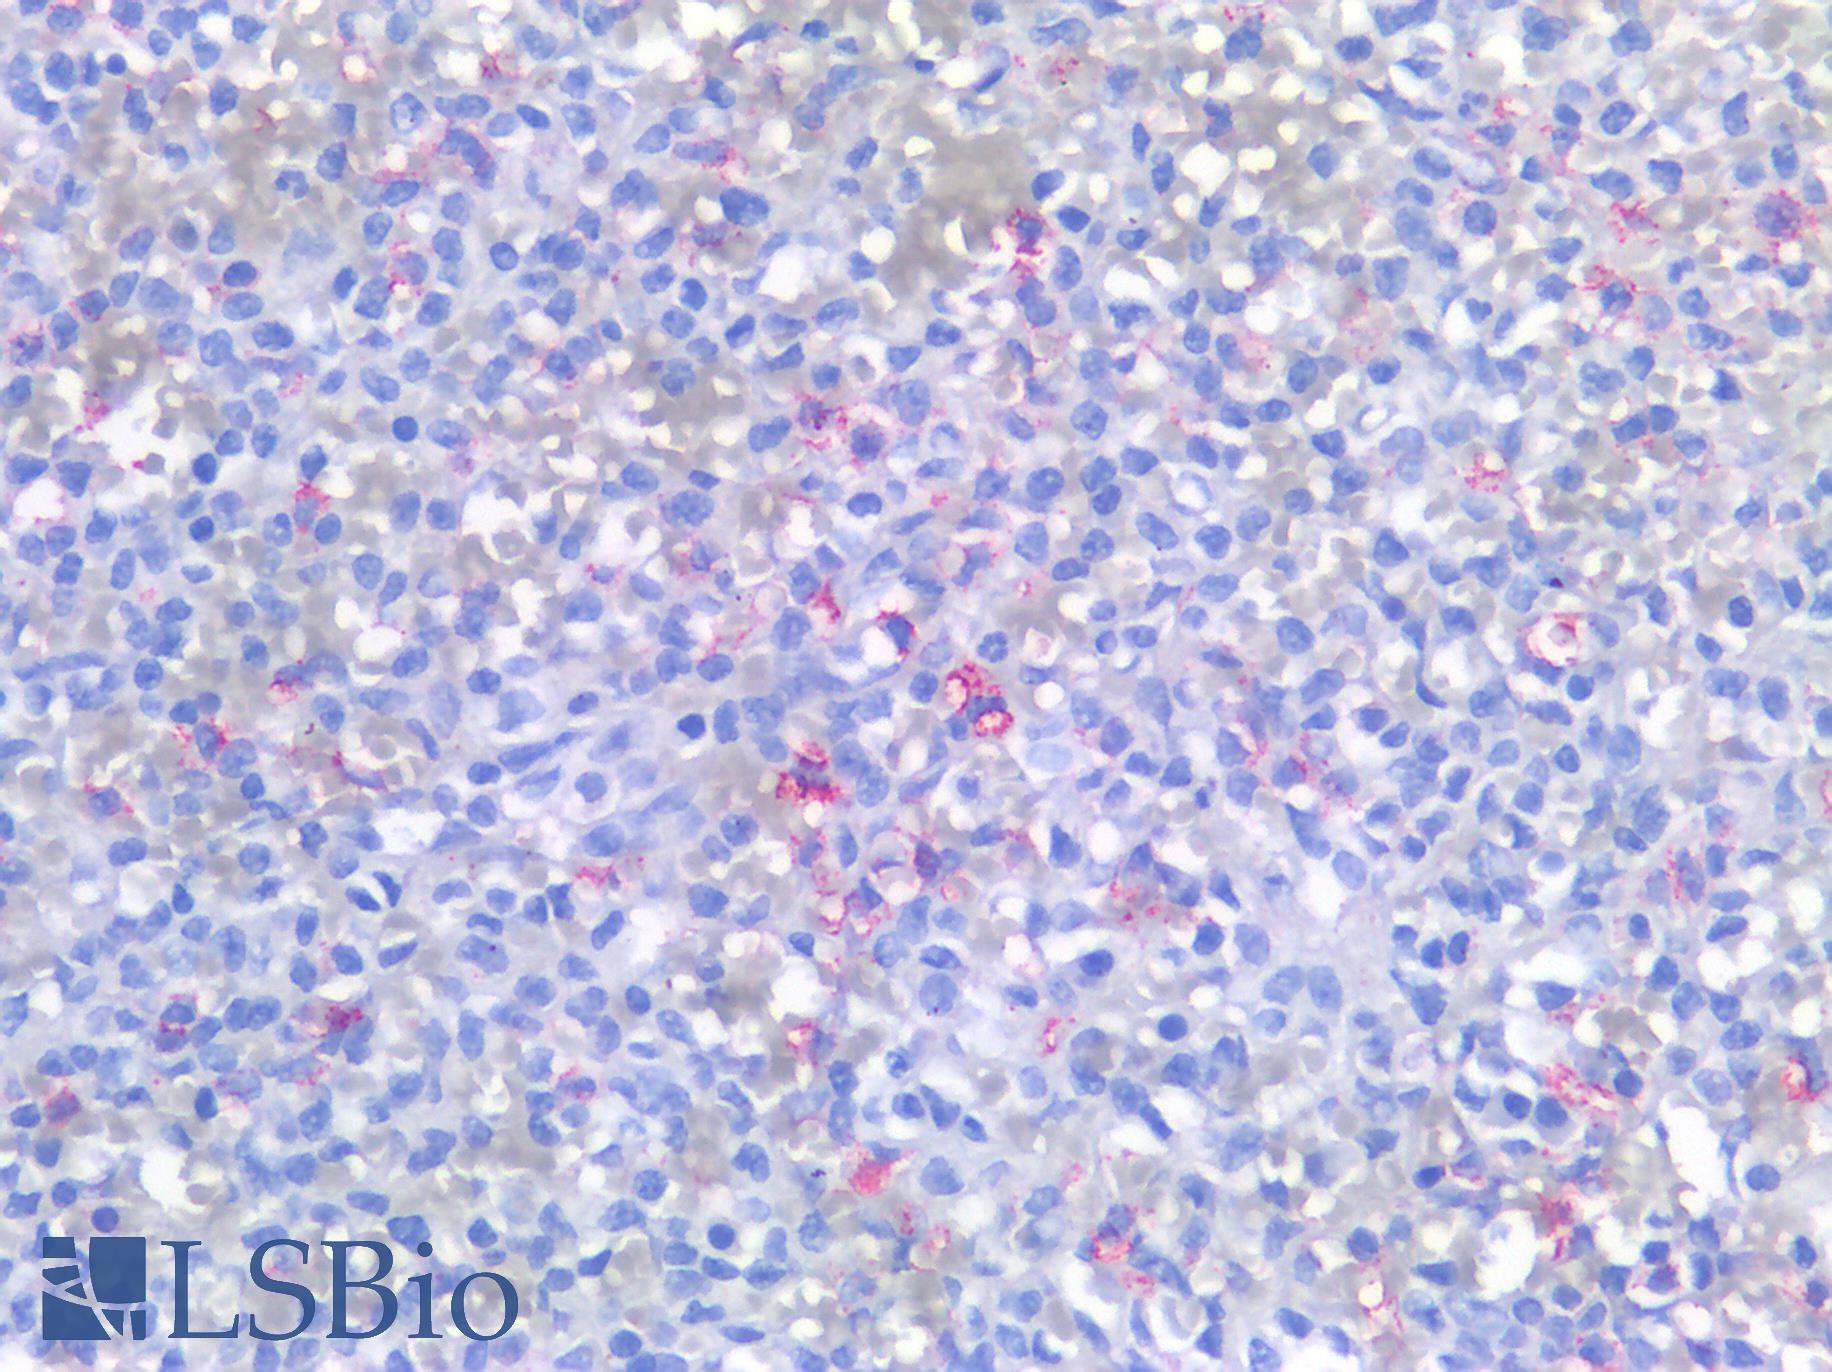 Hairy Cell Leukemia Antibody - Human Spleen, Hairy Cell Lukemia: Formalin-Fixed, Paraffin-Embedded (FFPE)